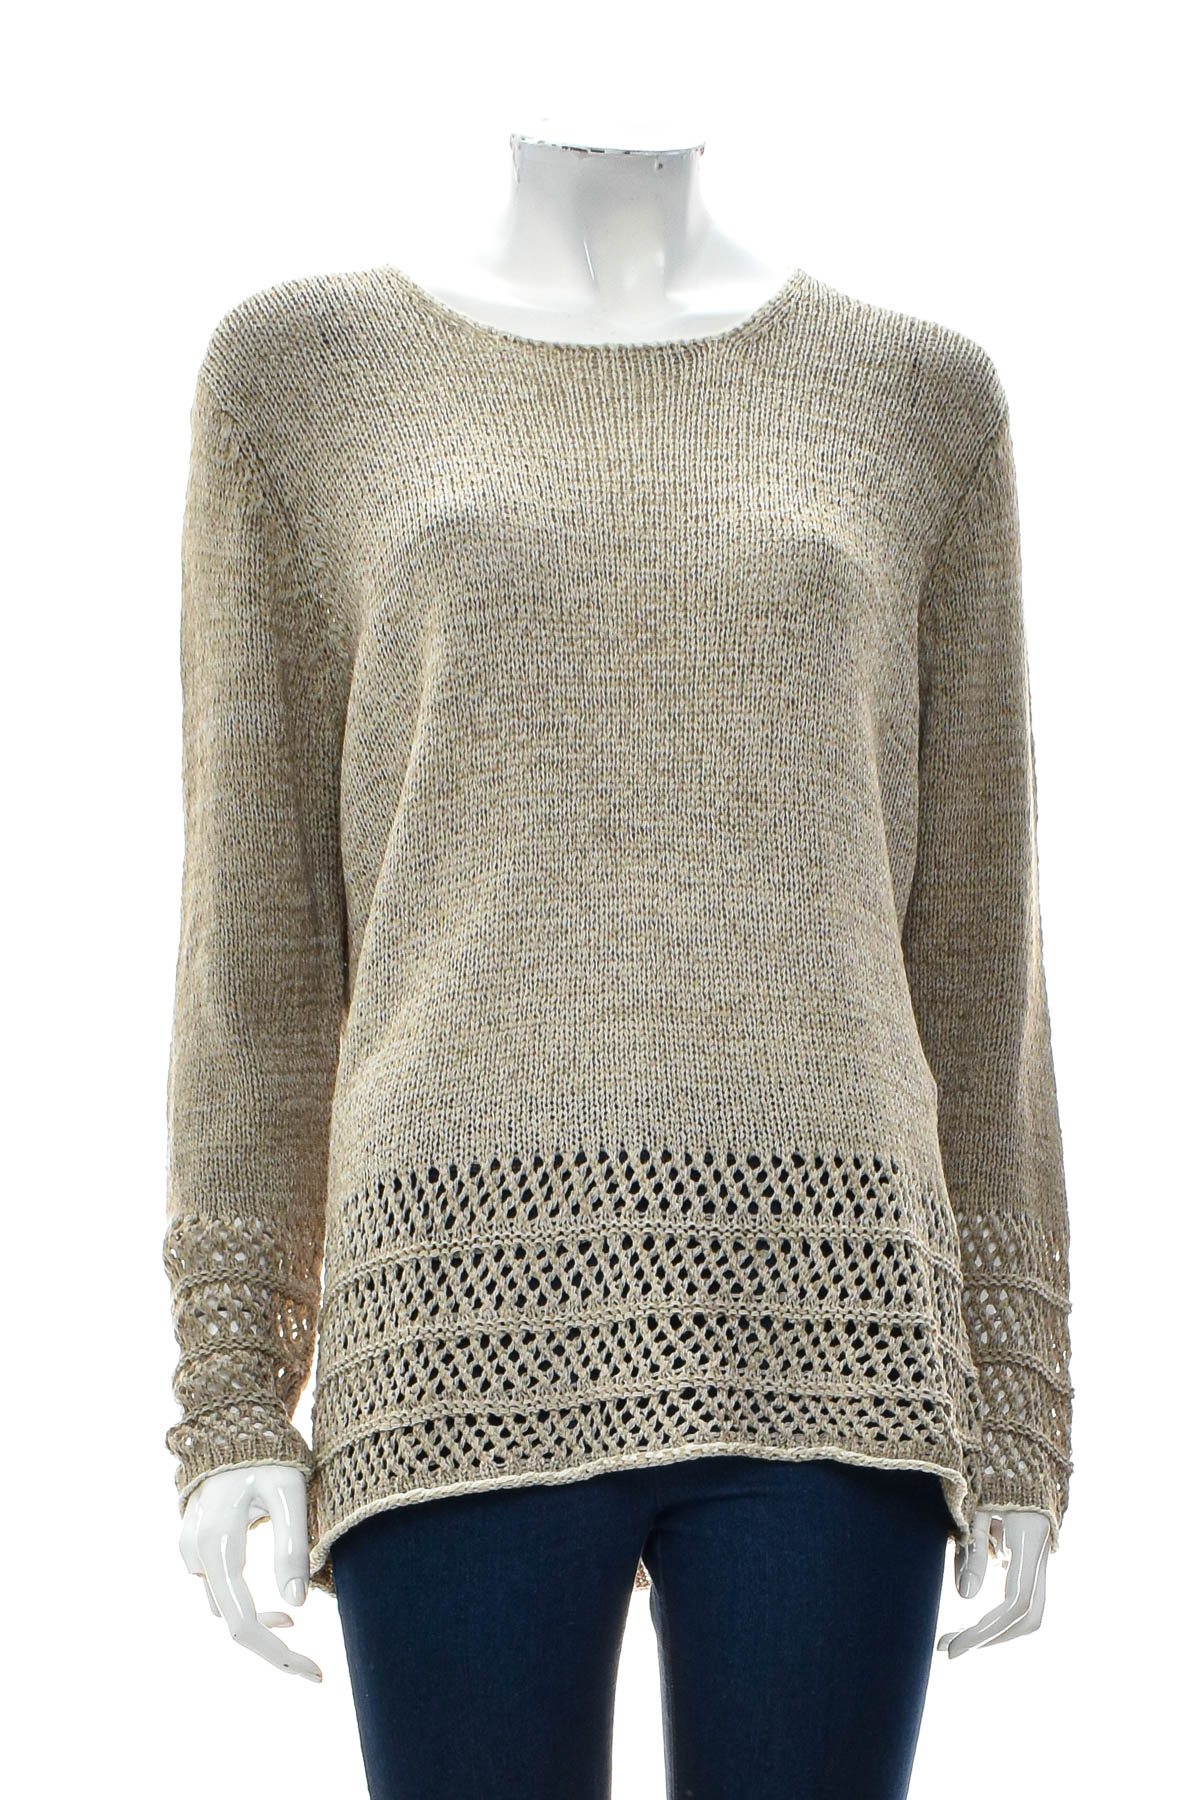 Women's sweater - Christa Probst - 0